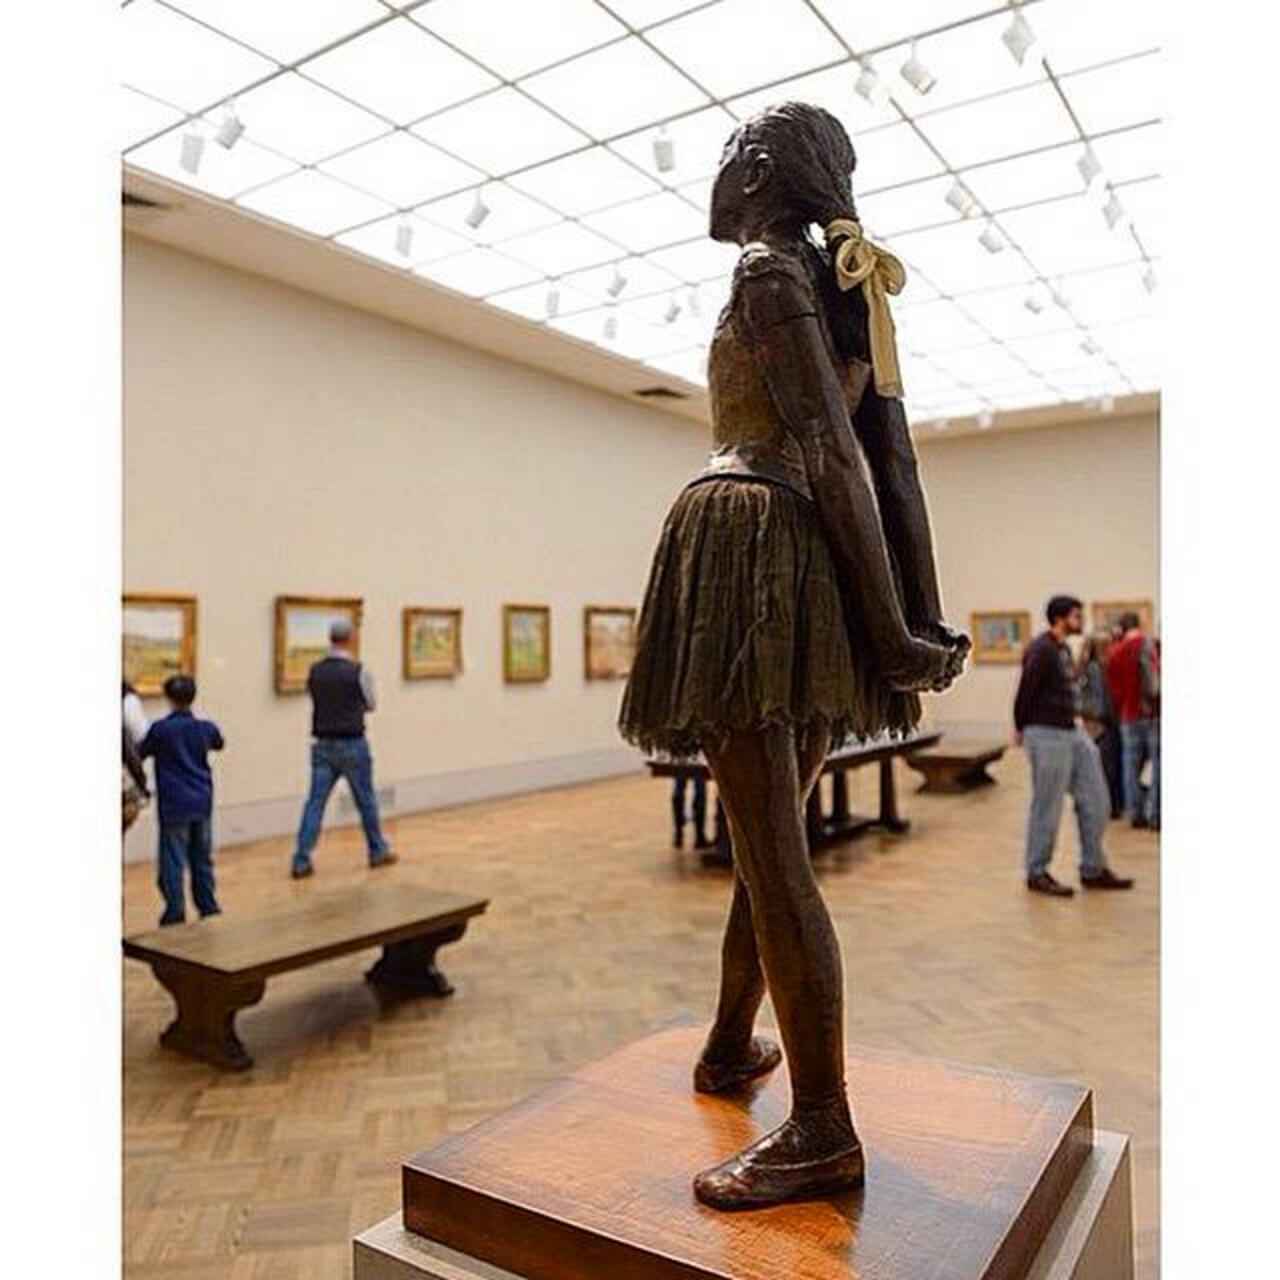 Degas’ #dancer looks over an #Impressionism gallery @philamuseum. #regram Photo via Instagram by @sankappo2 http://t.co/3vxouxjKdB